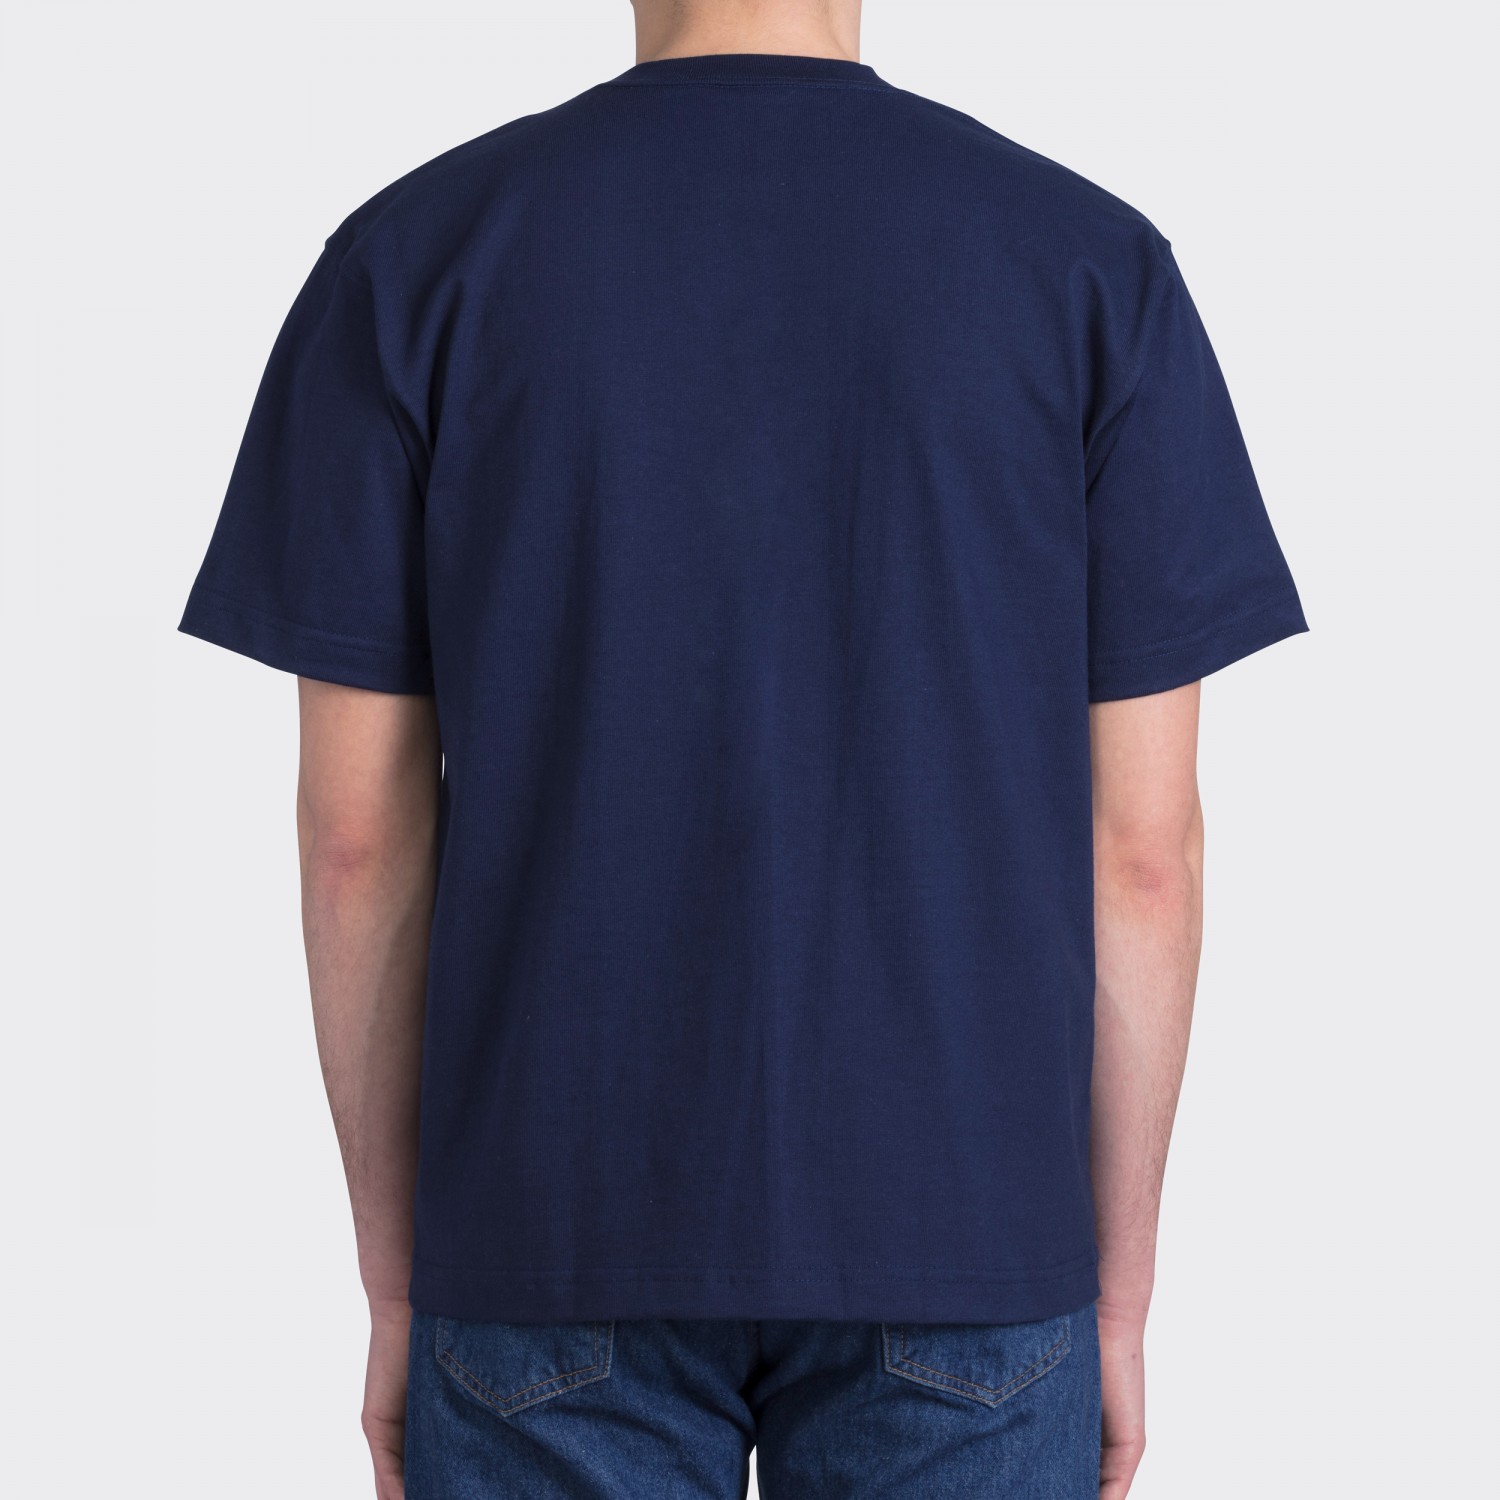 Camber USA : Pocket T-shirt Navy 